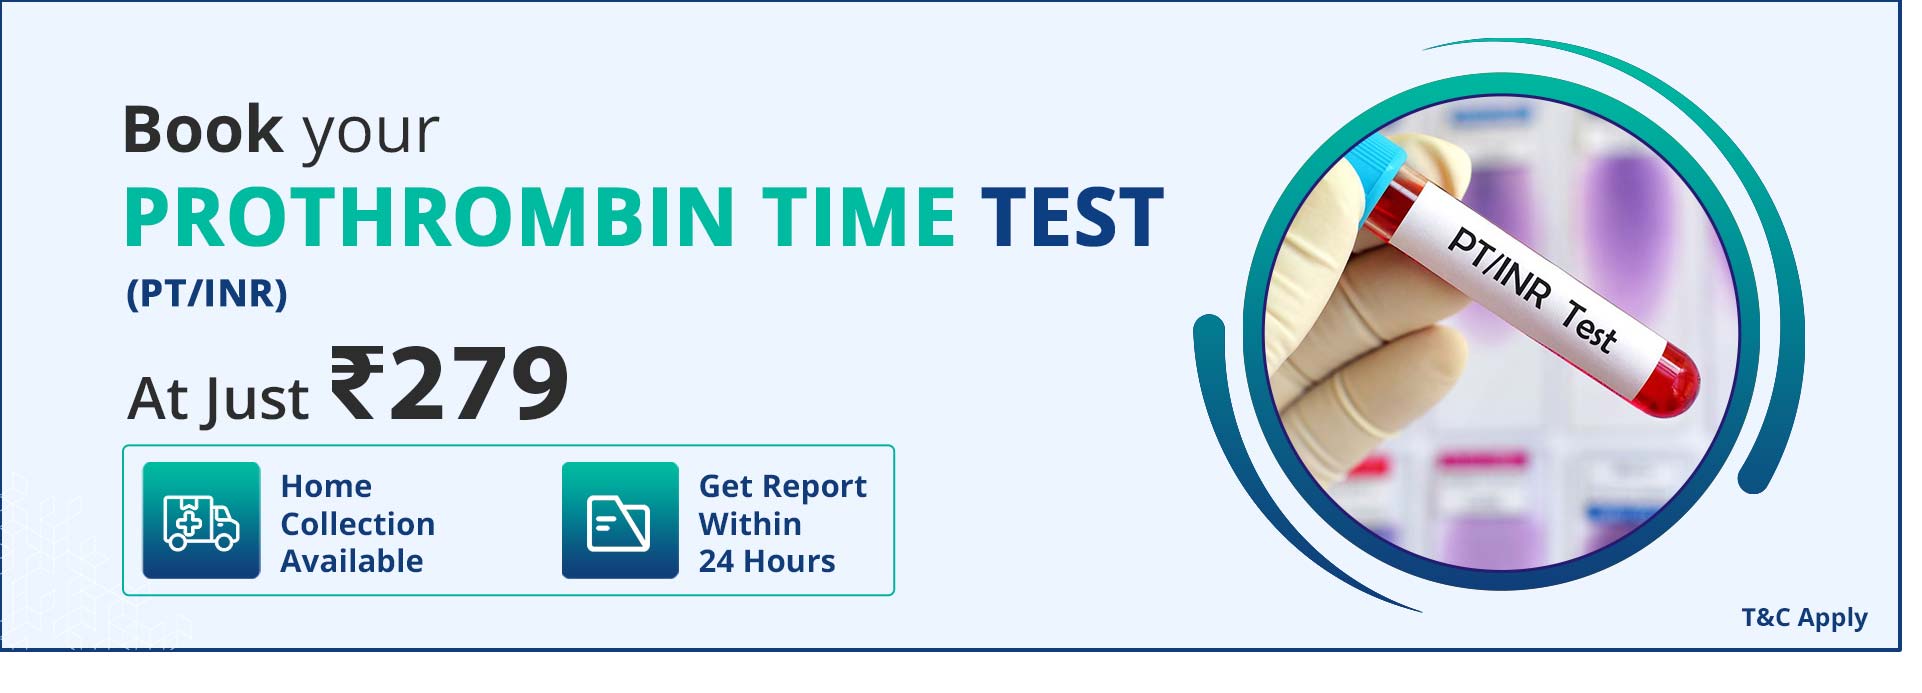 Prothrombin Time Test